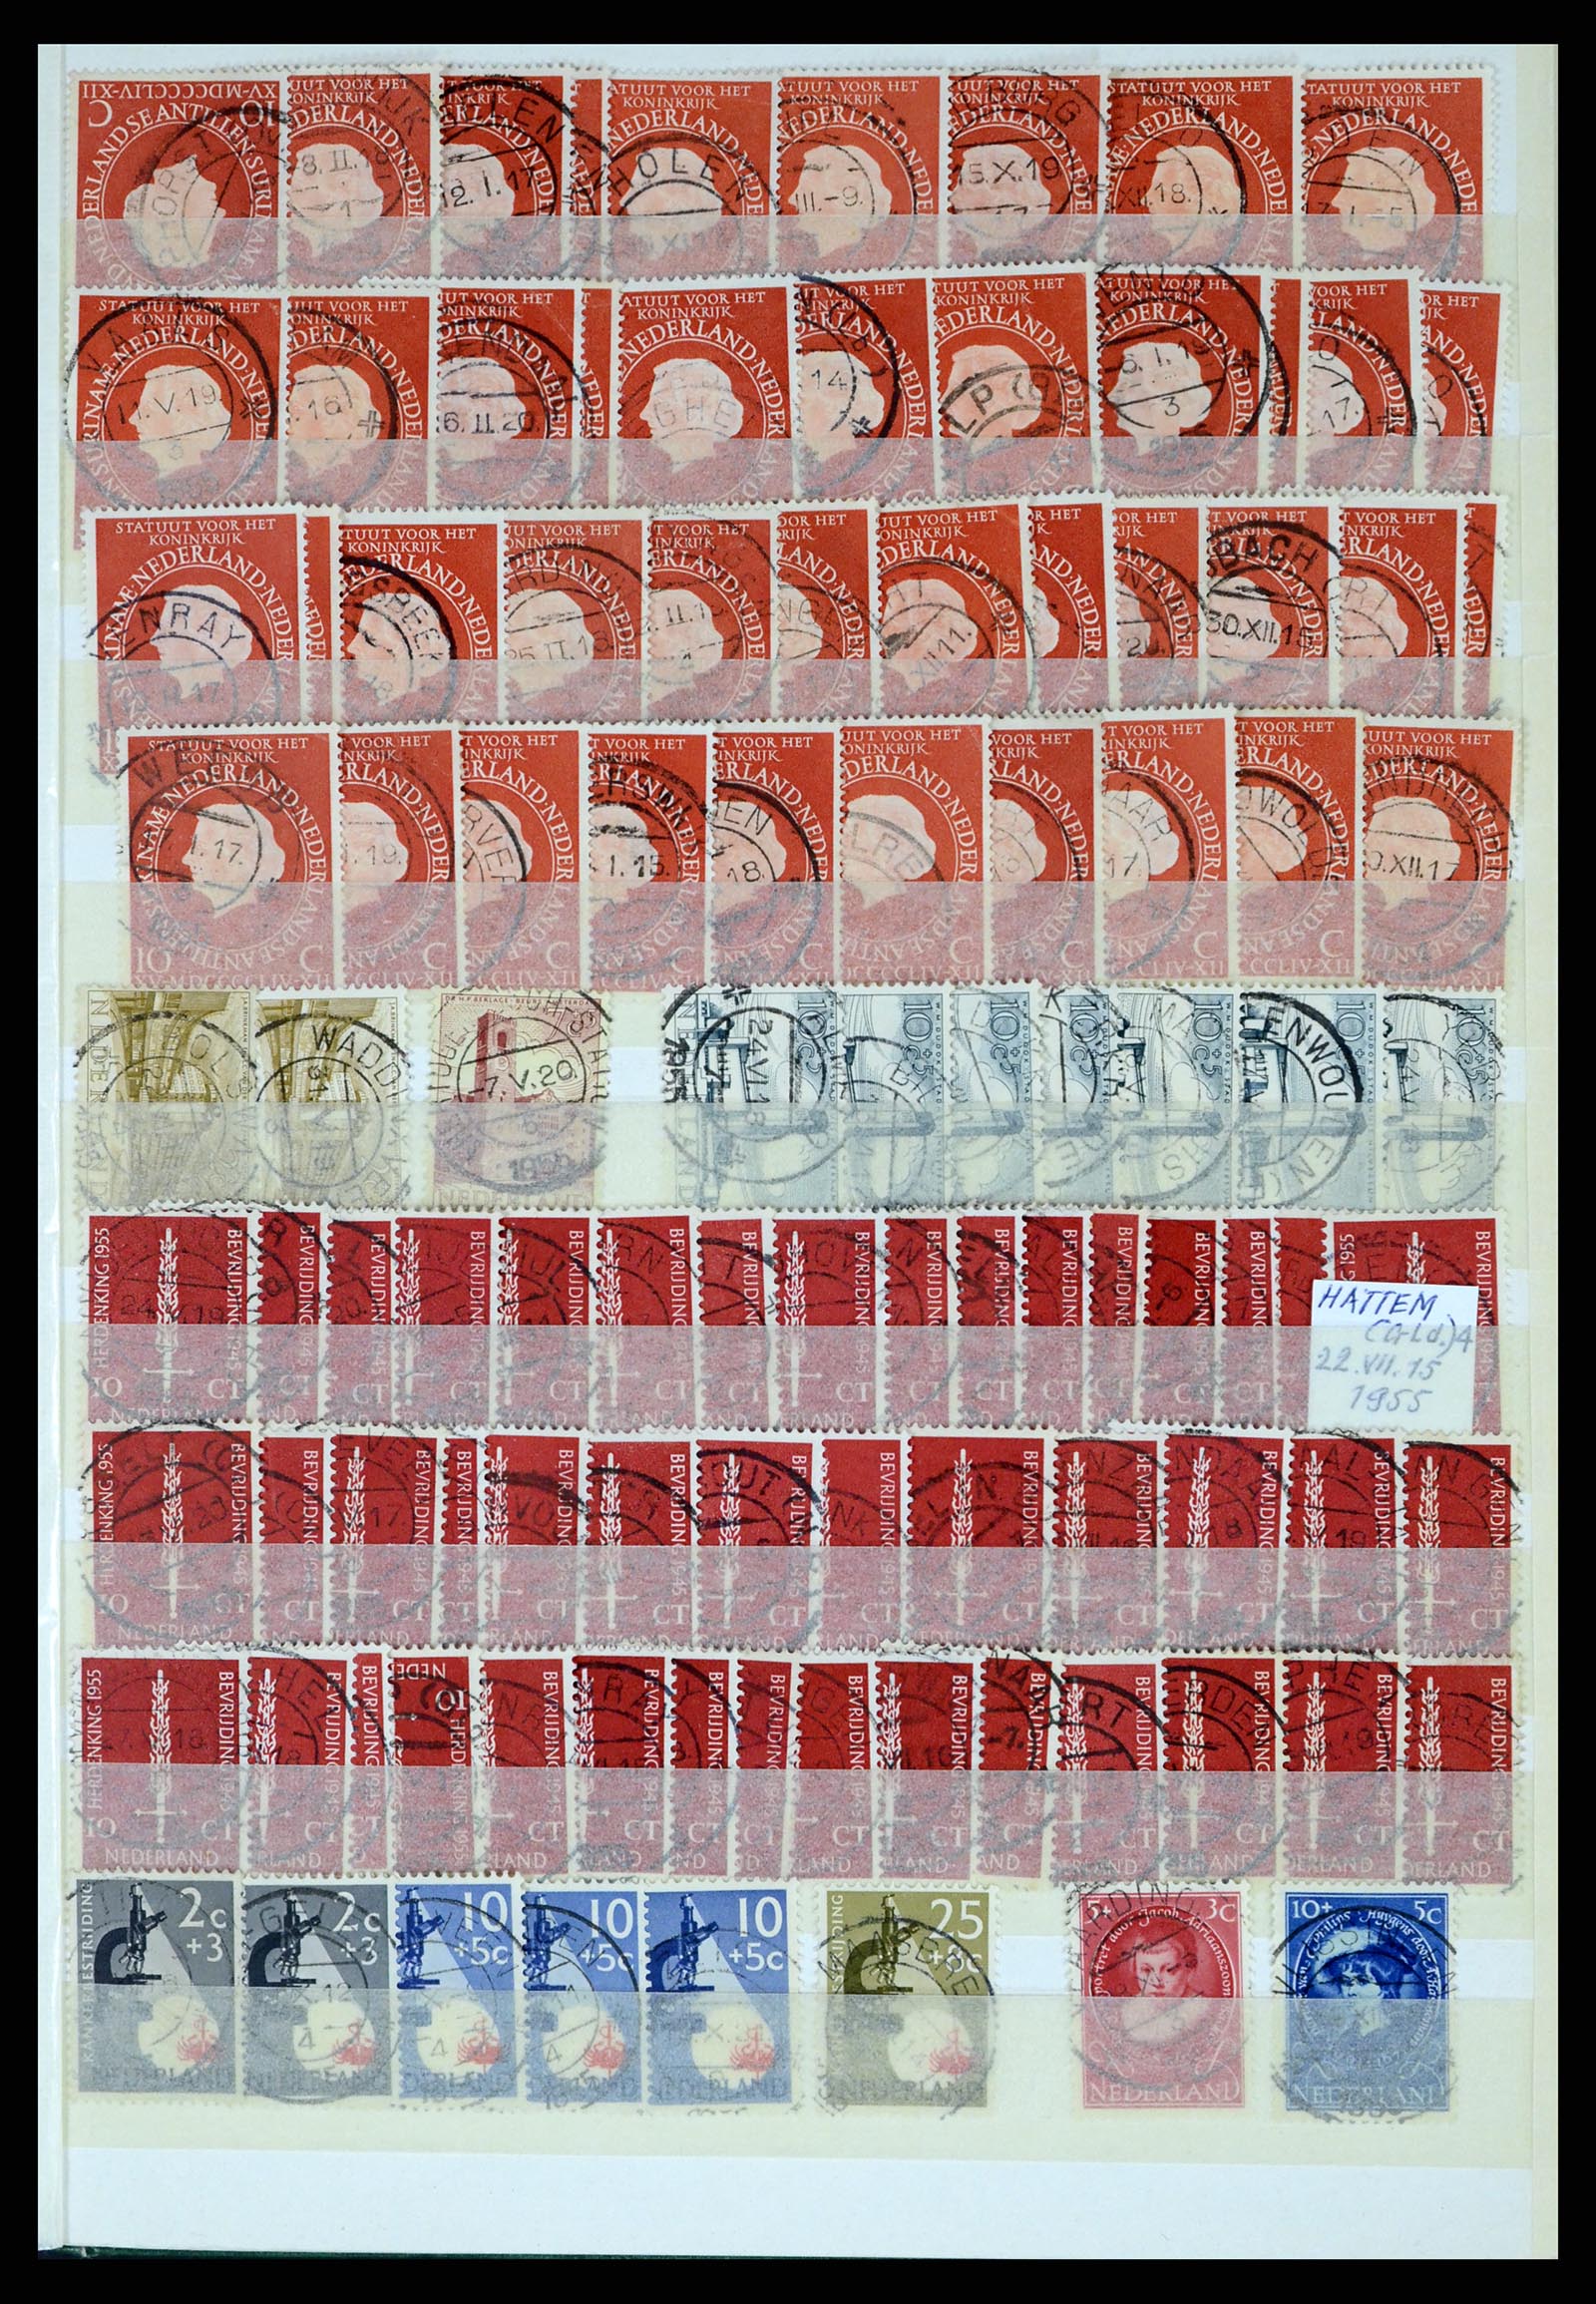 37424 051 - Stamp collection 37424 Netherlands shortbar cancels.